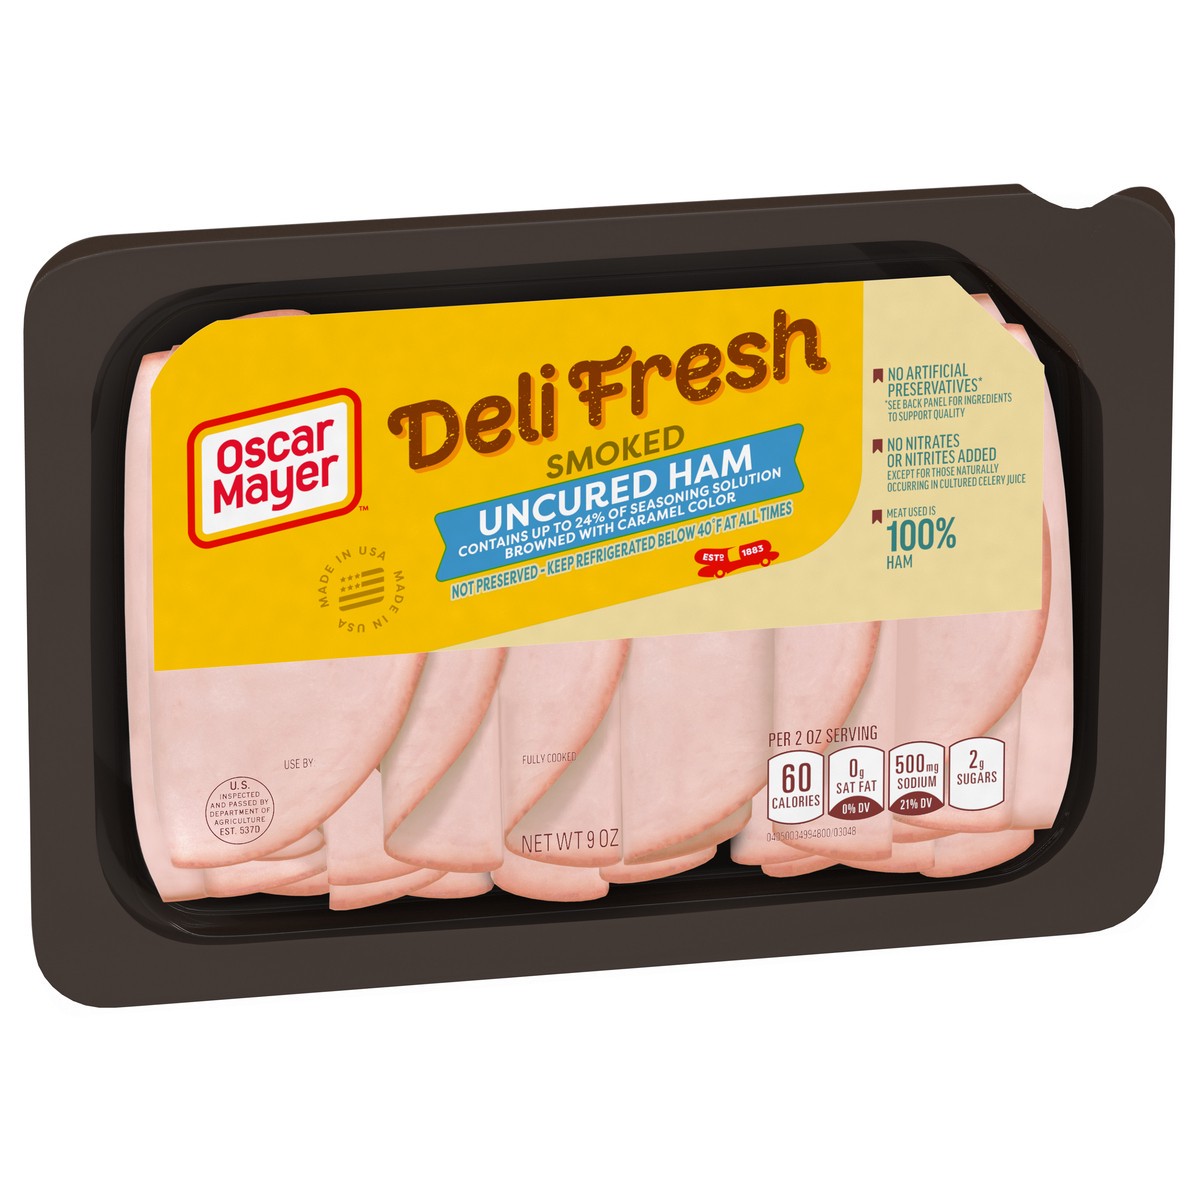 slide 6 of 9, Oscar Mayer Deli Fresh Smoked Uncured Ham Sliced Lunch Meat, 9 oz. Tray, 9 oz